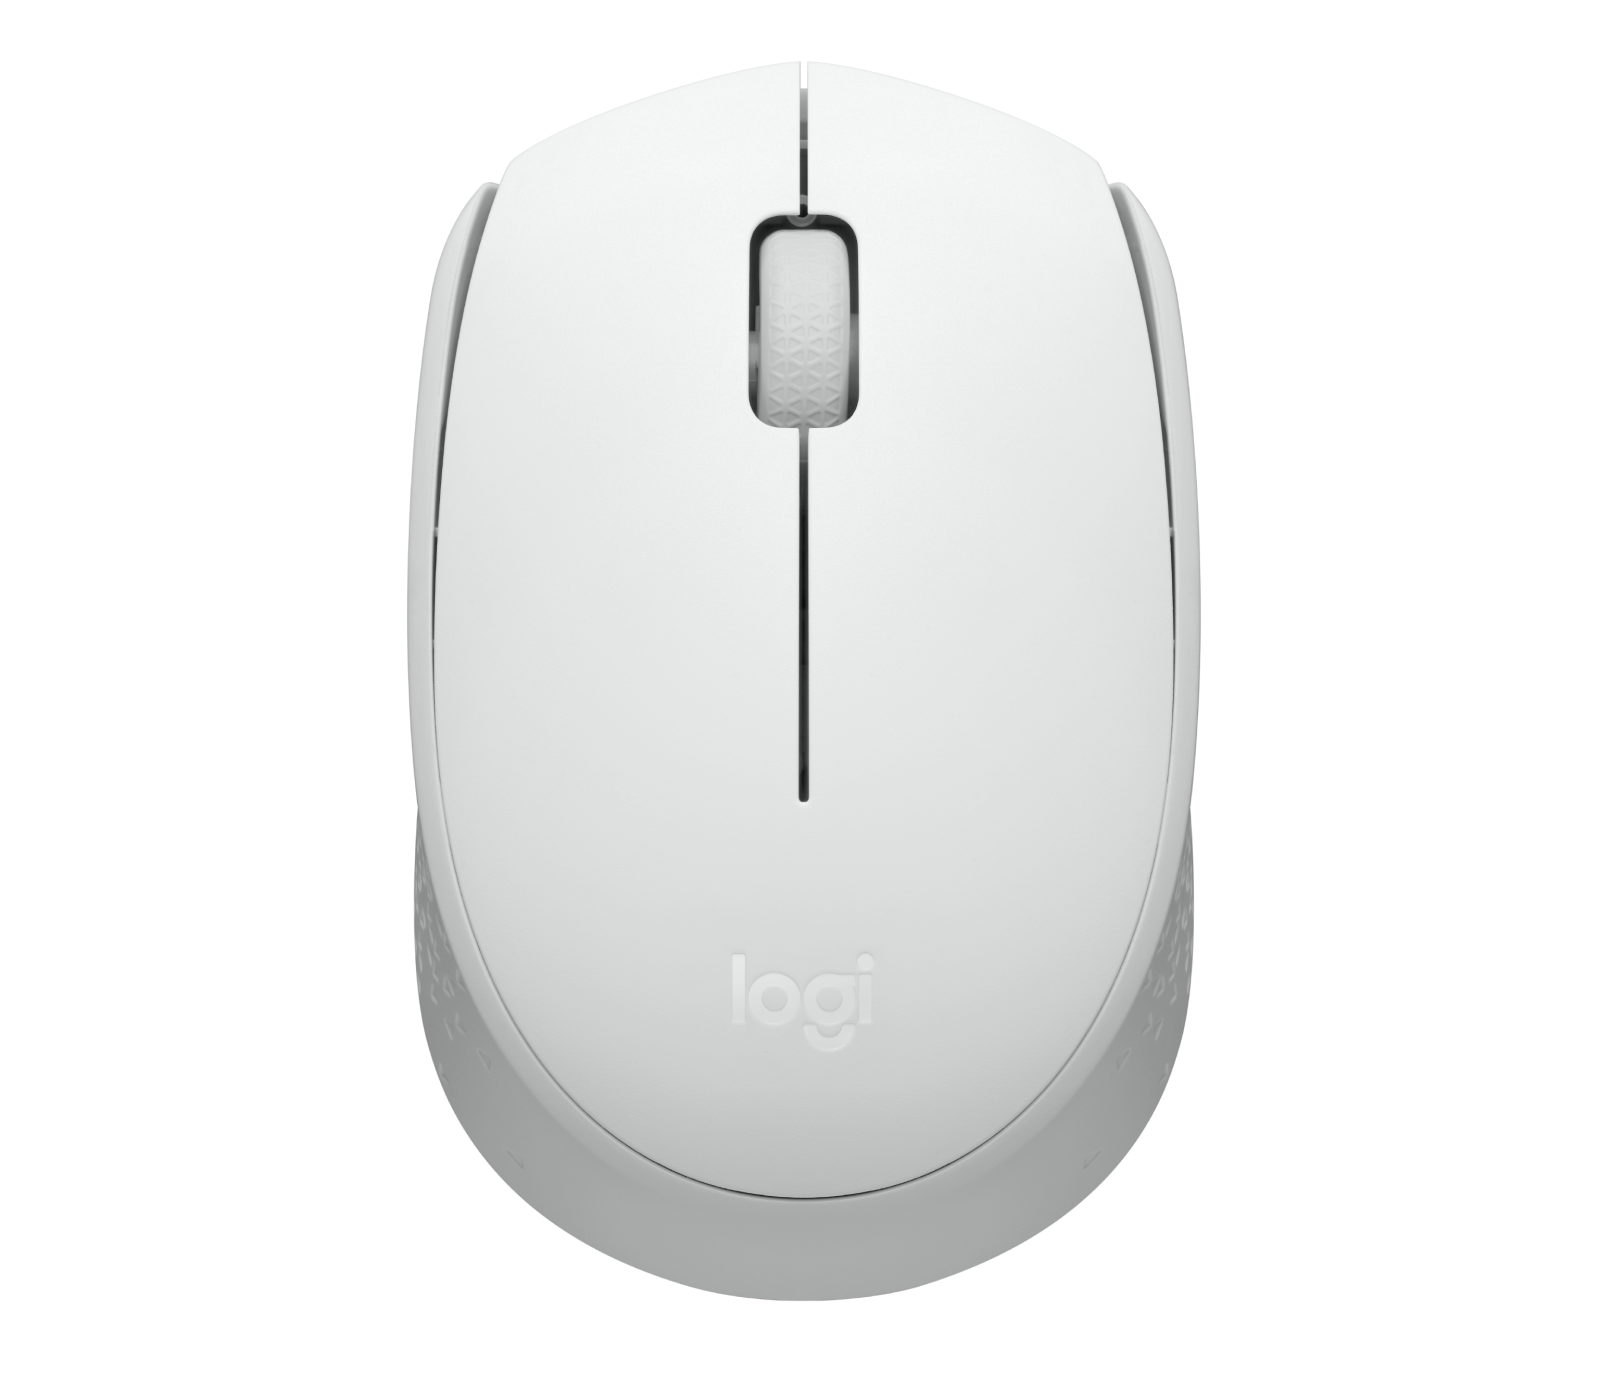 Modstand Virksomhedsbeskrivelse kop M170 Wireless Mouse - Compact & Portable | Logitech